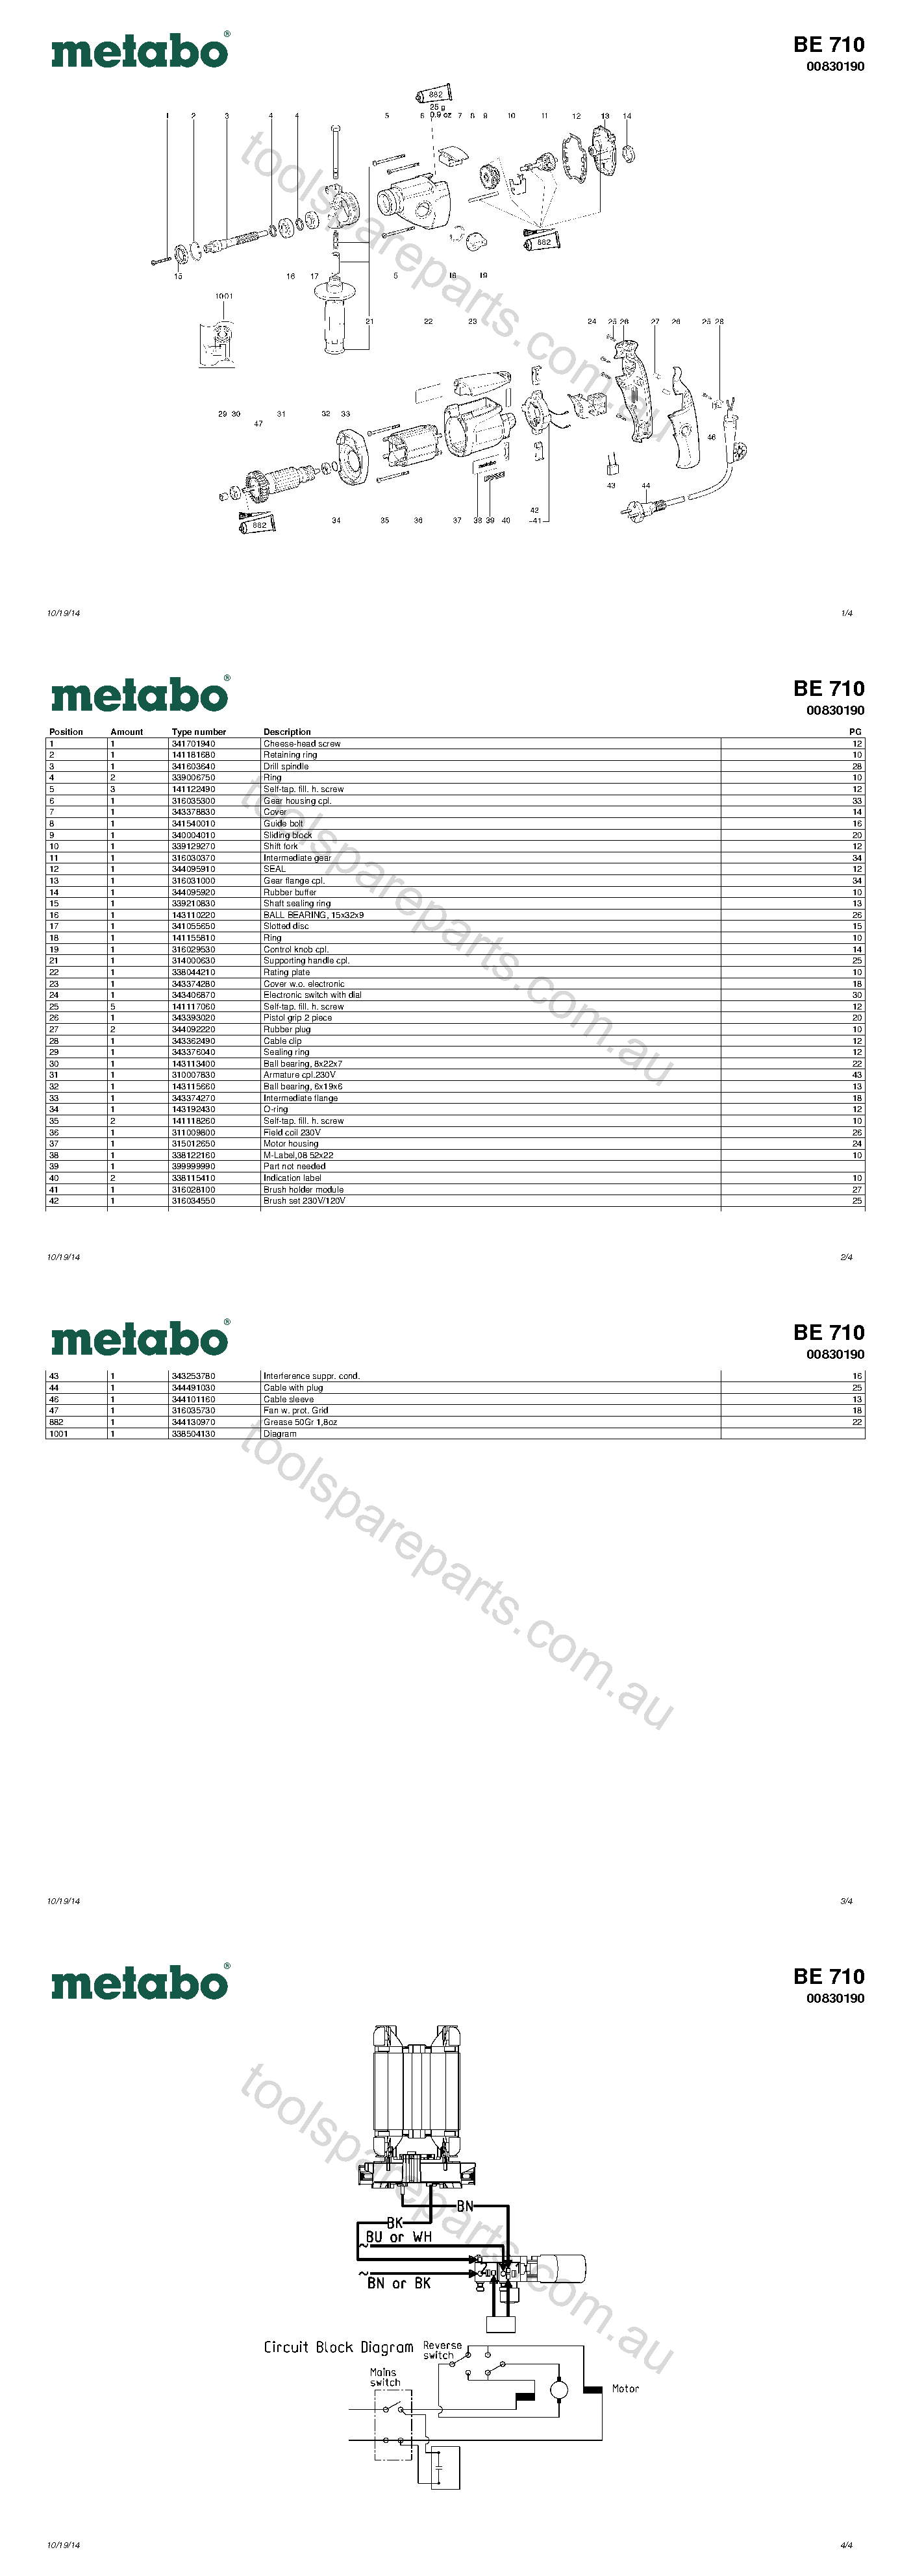 Metabo BE 710 00830190  Diagram 1